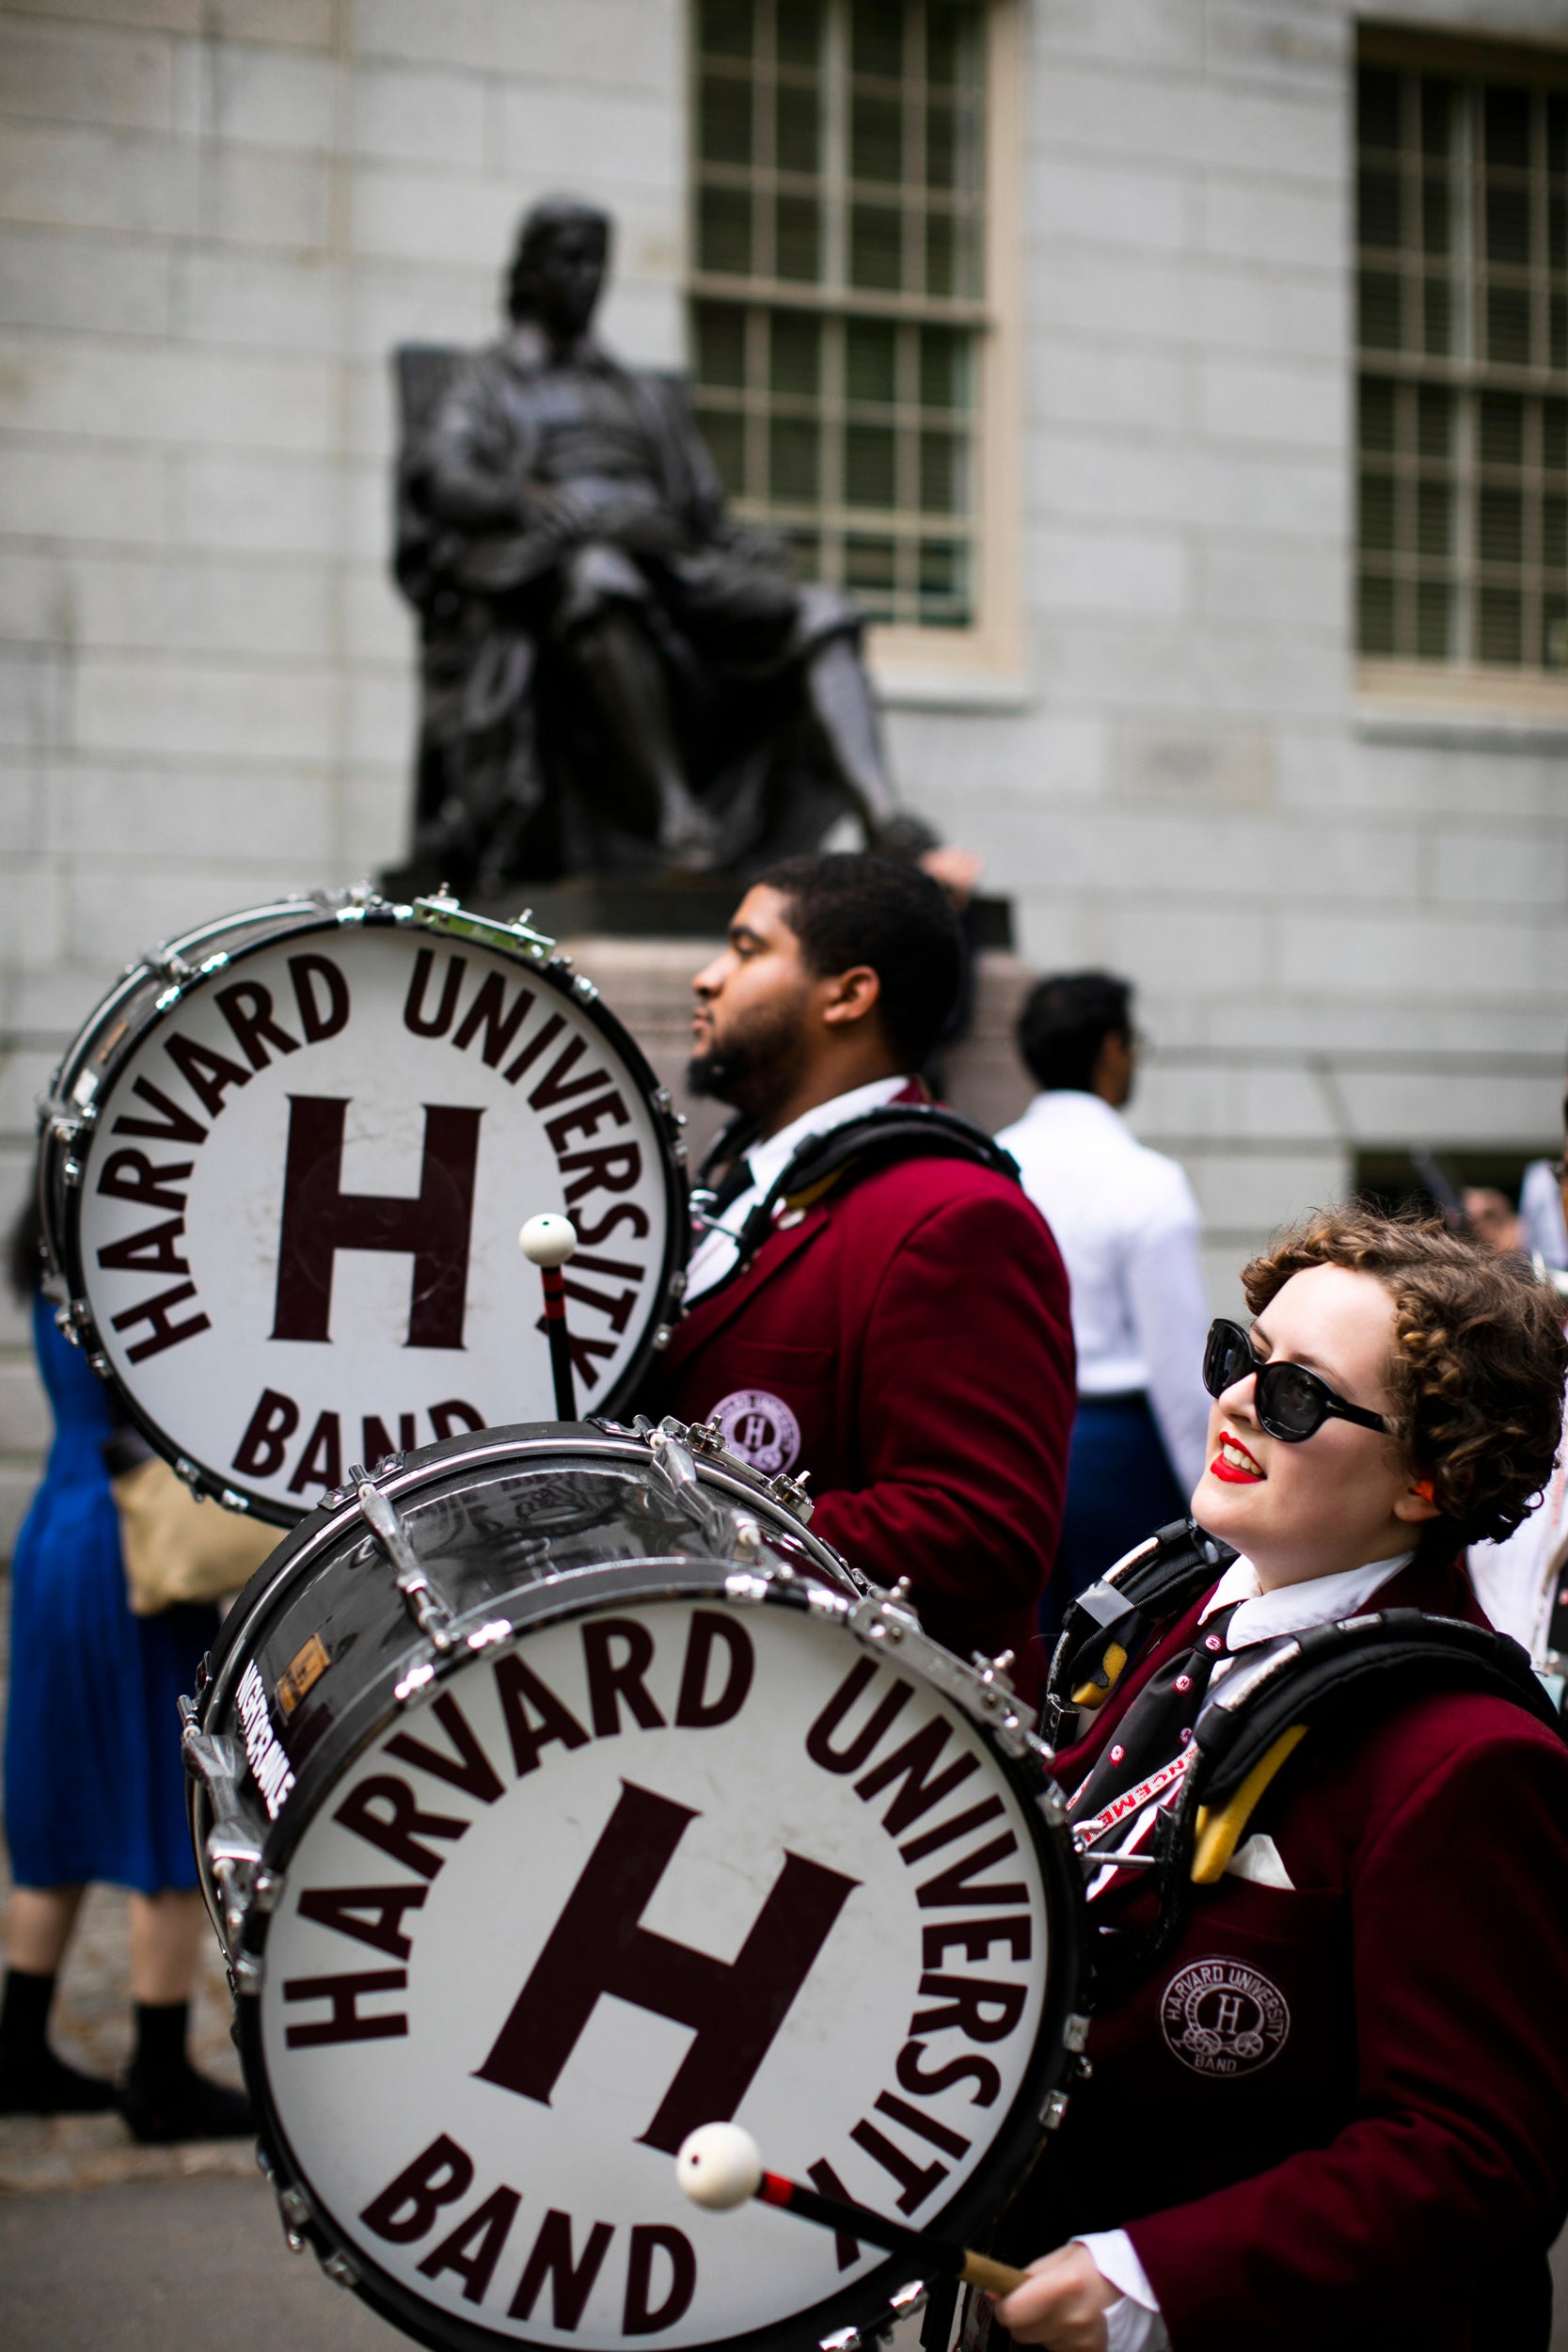 Harvard Band drummers pass the John Harvard Statue.